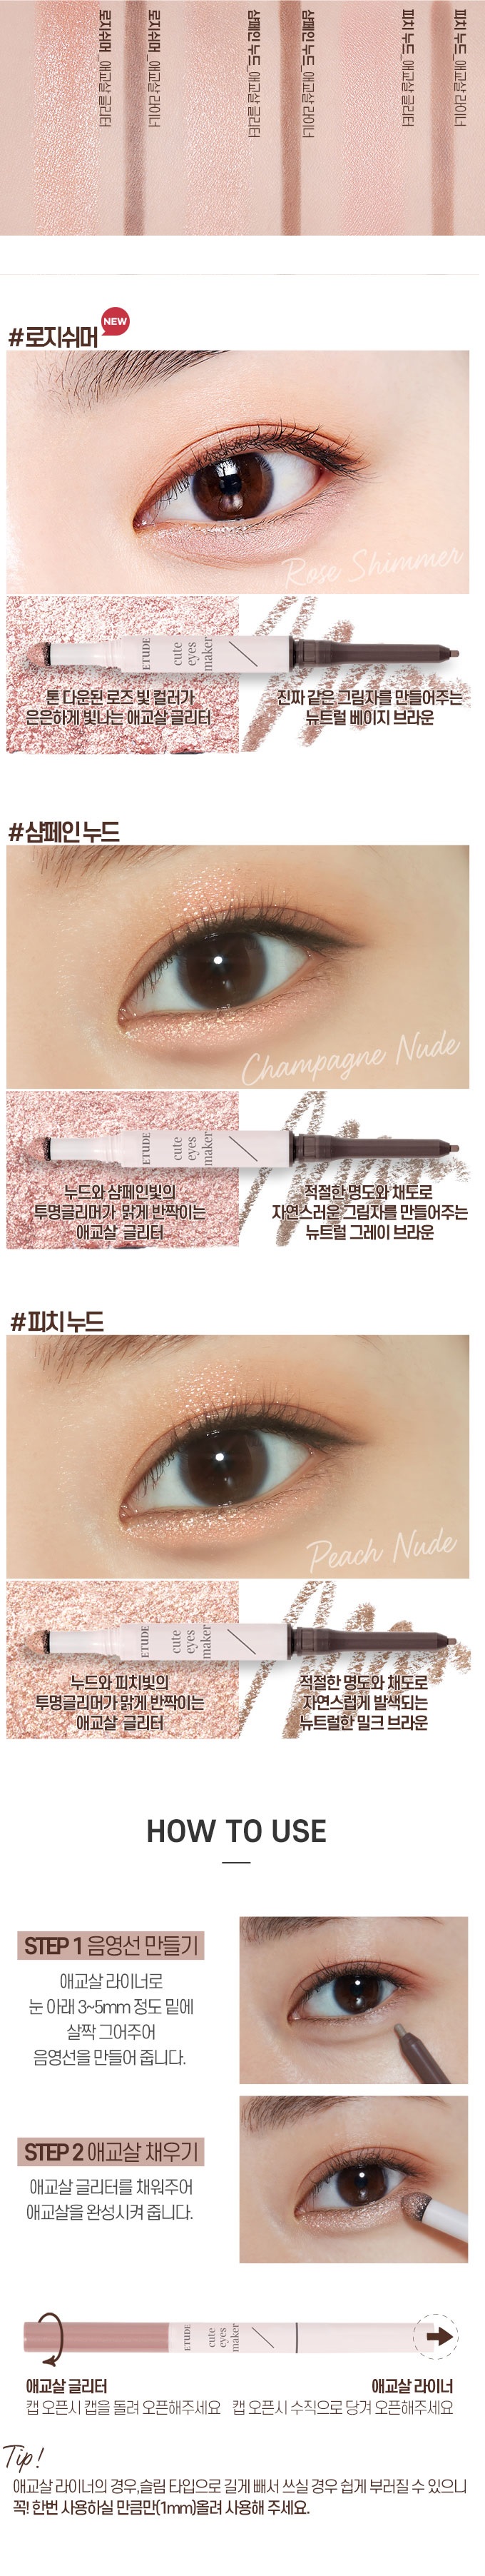 Etude House Cute Eyes Maker korean skincare product online shop malaysia china india3